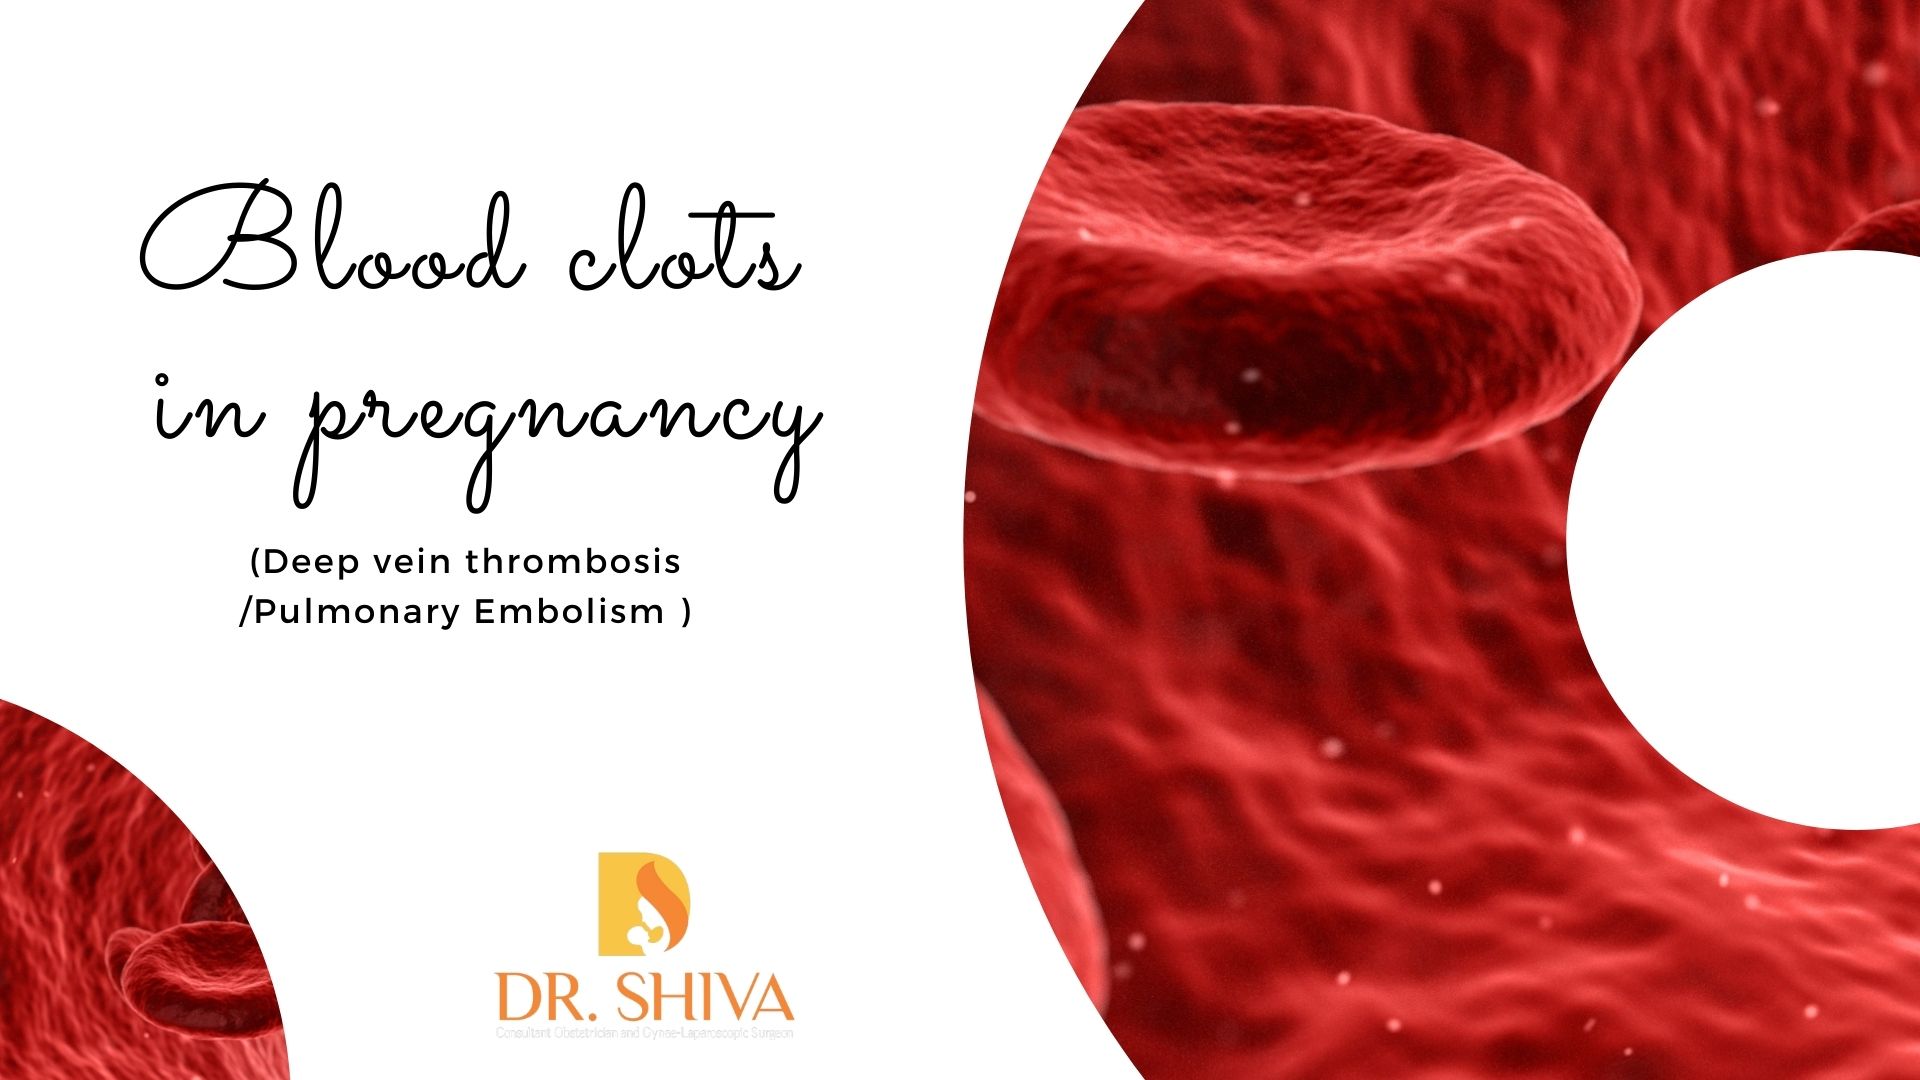 Blood clots during pregnancy (DVT/PE)